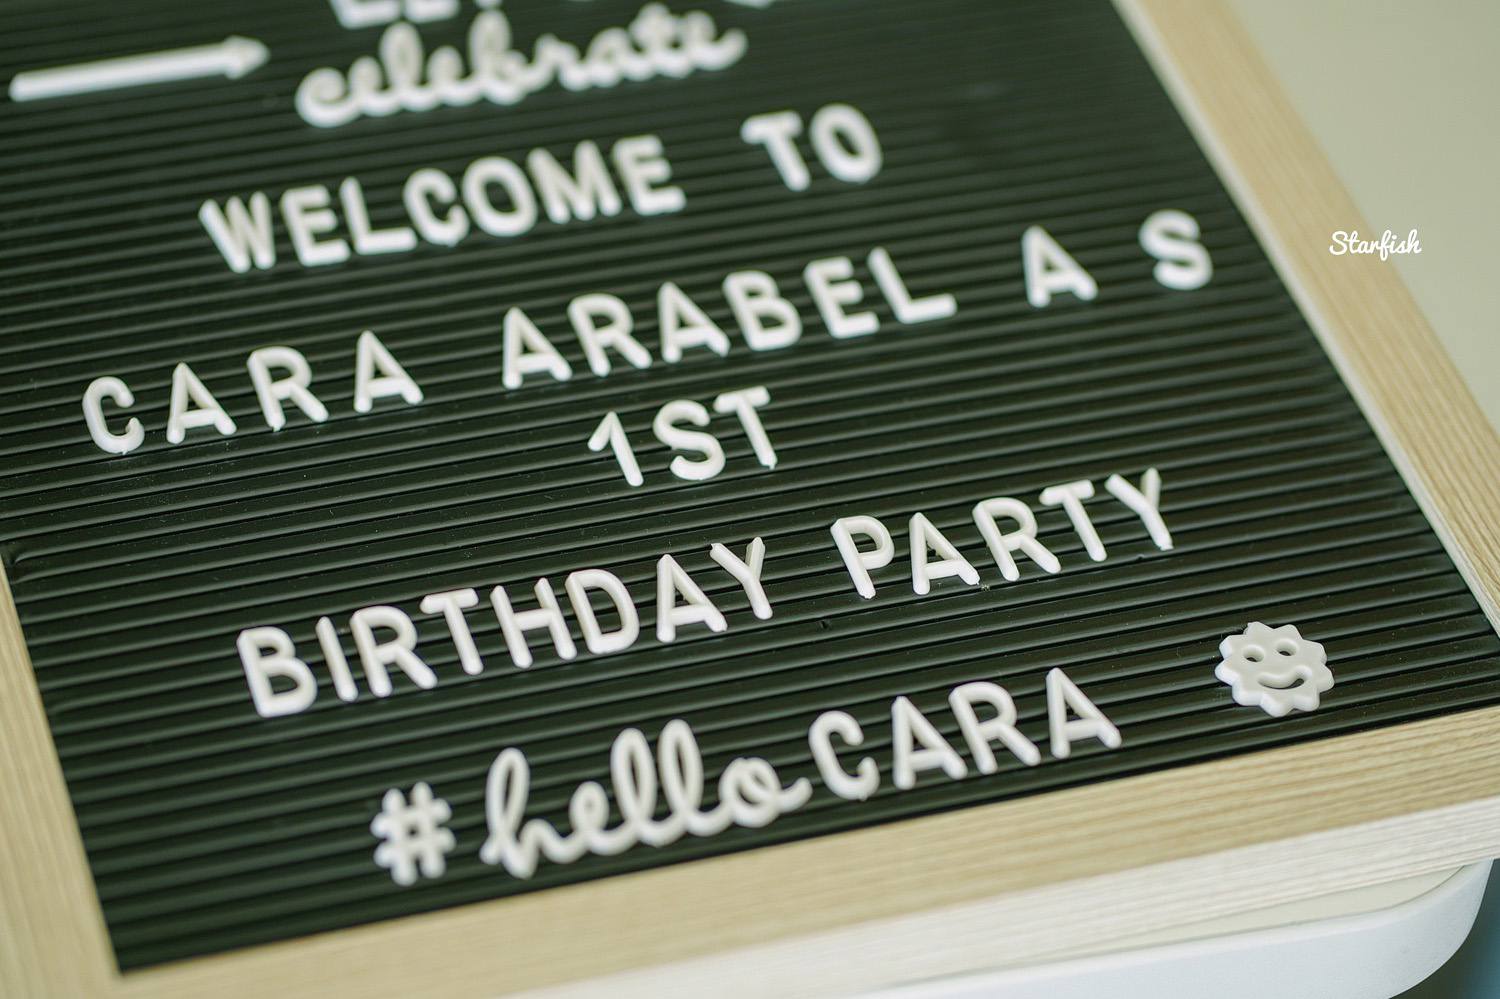 Cara's 1st Birthday